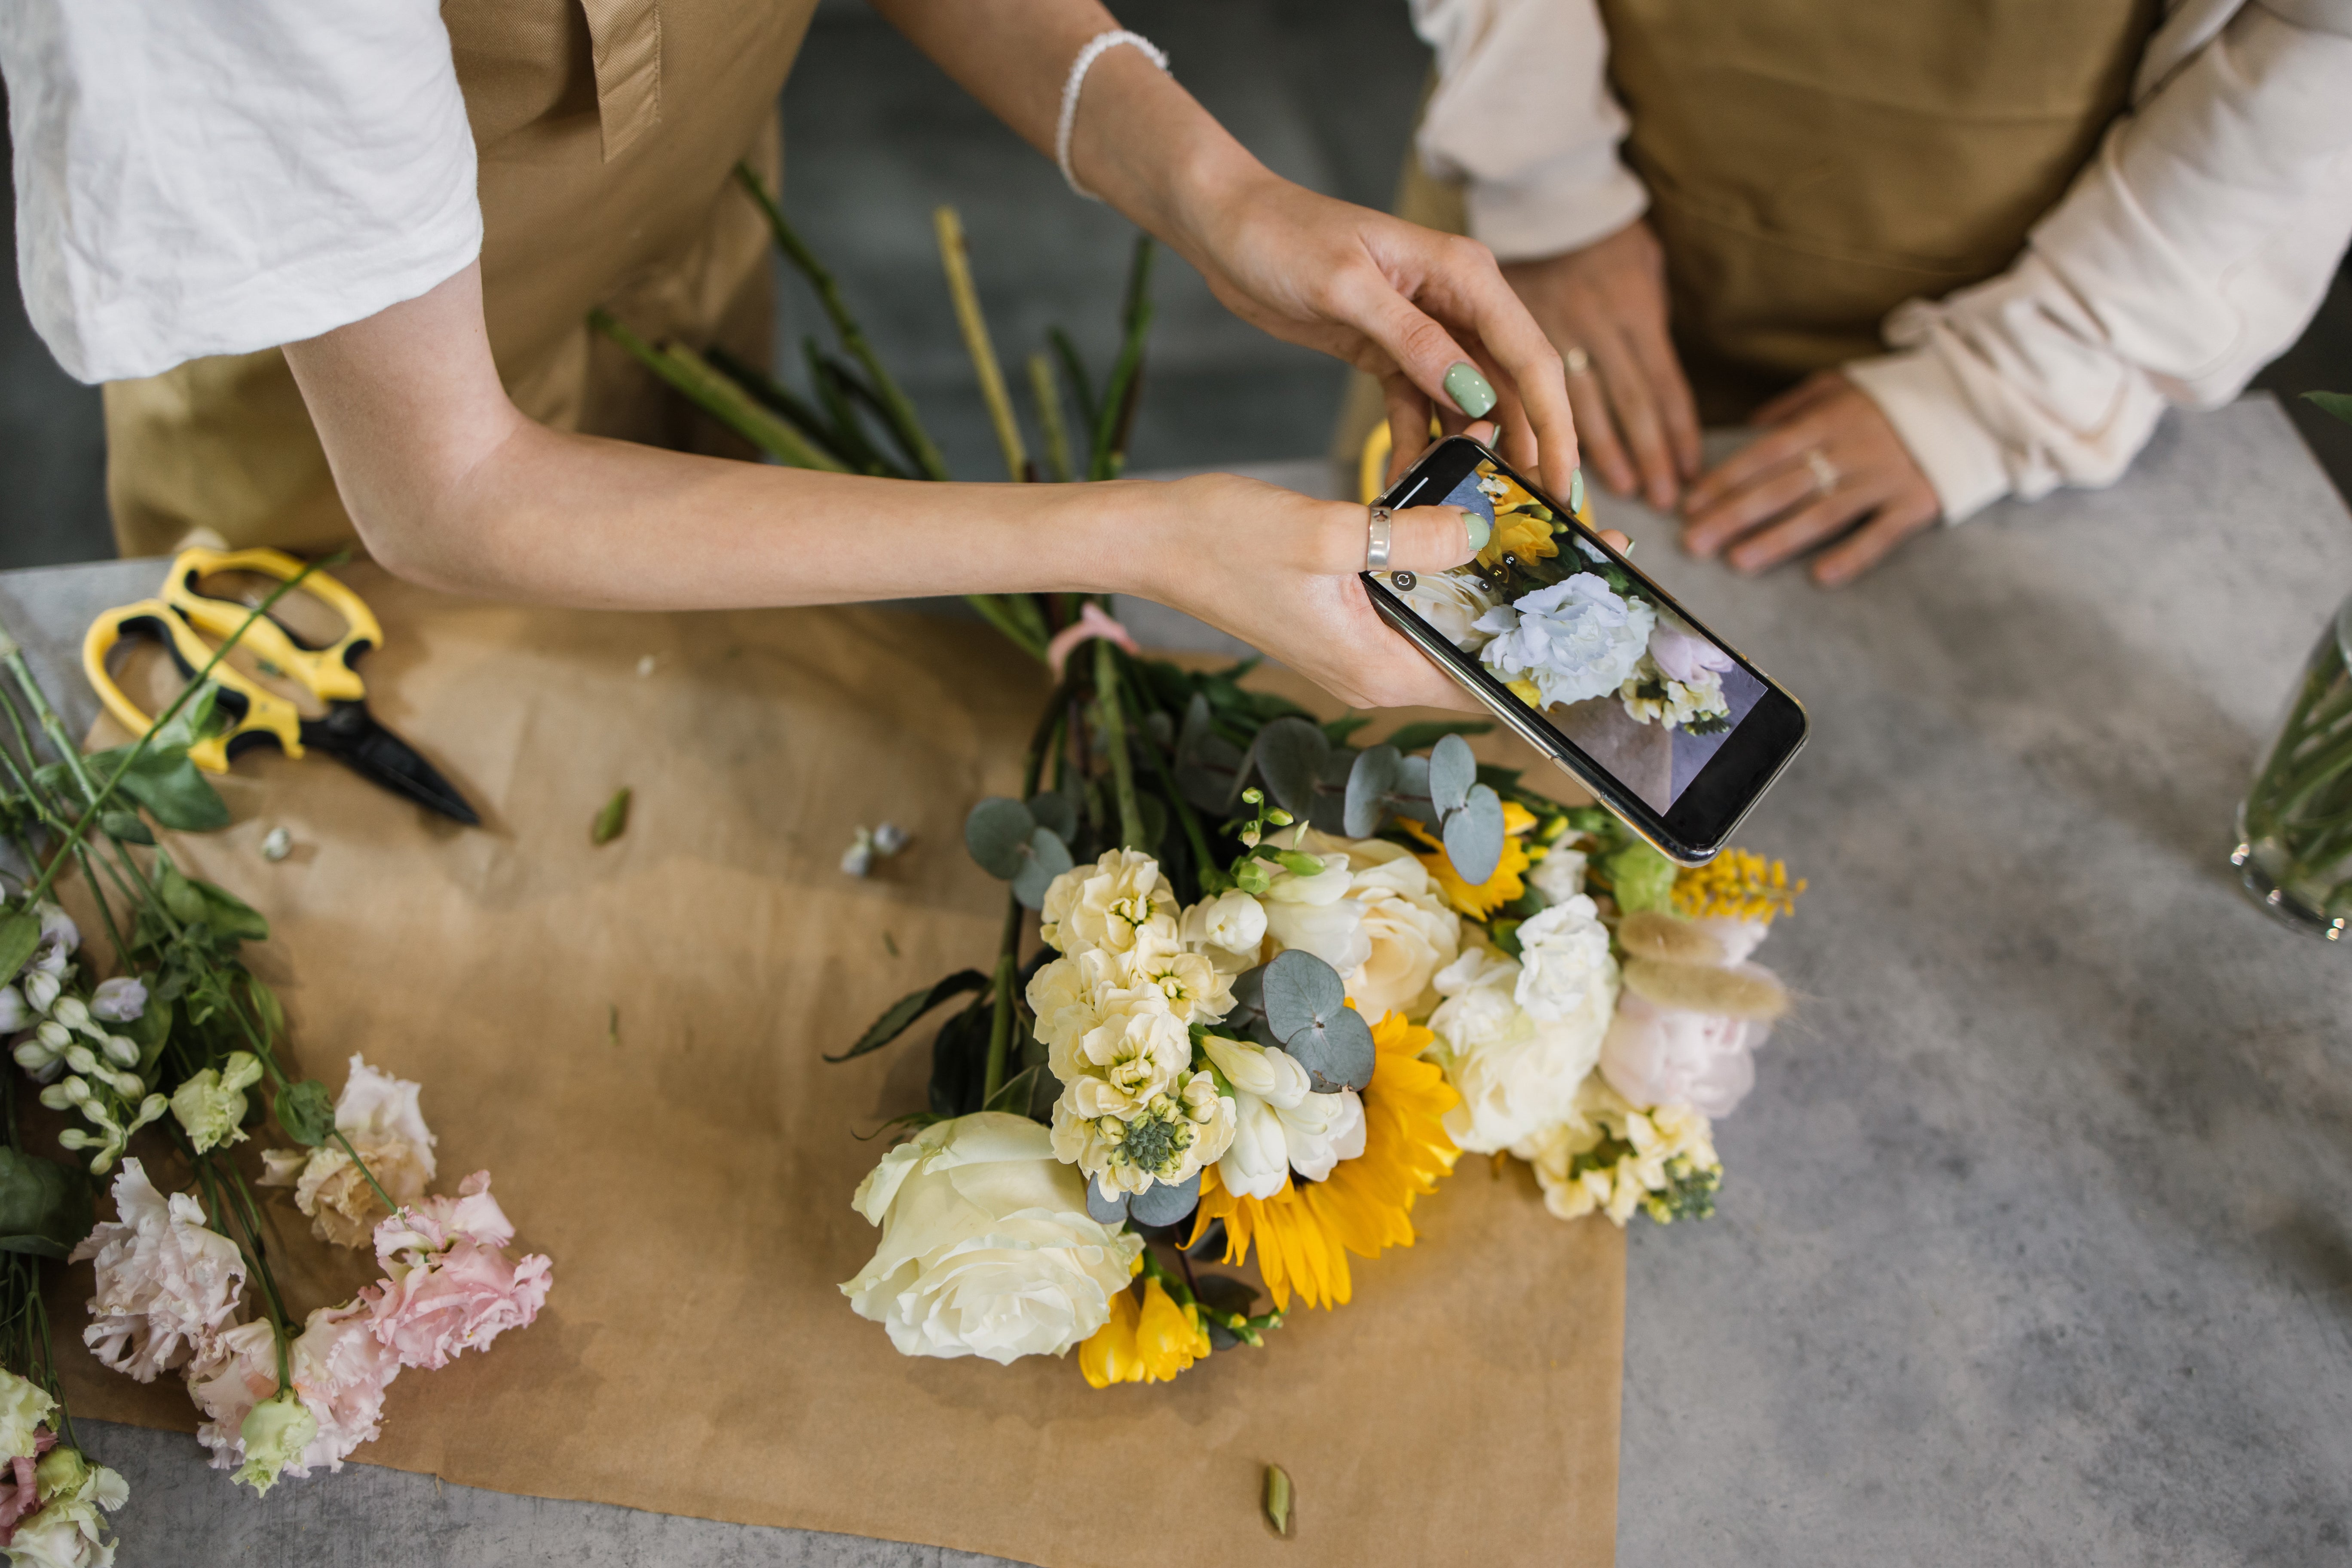 Where to Find the Most Instagram-Worthy Flower Arrangements